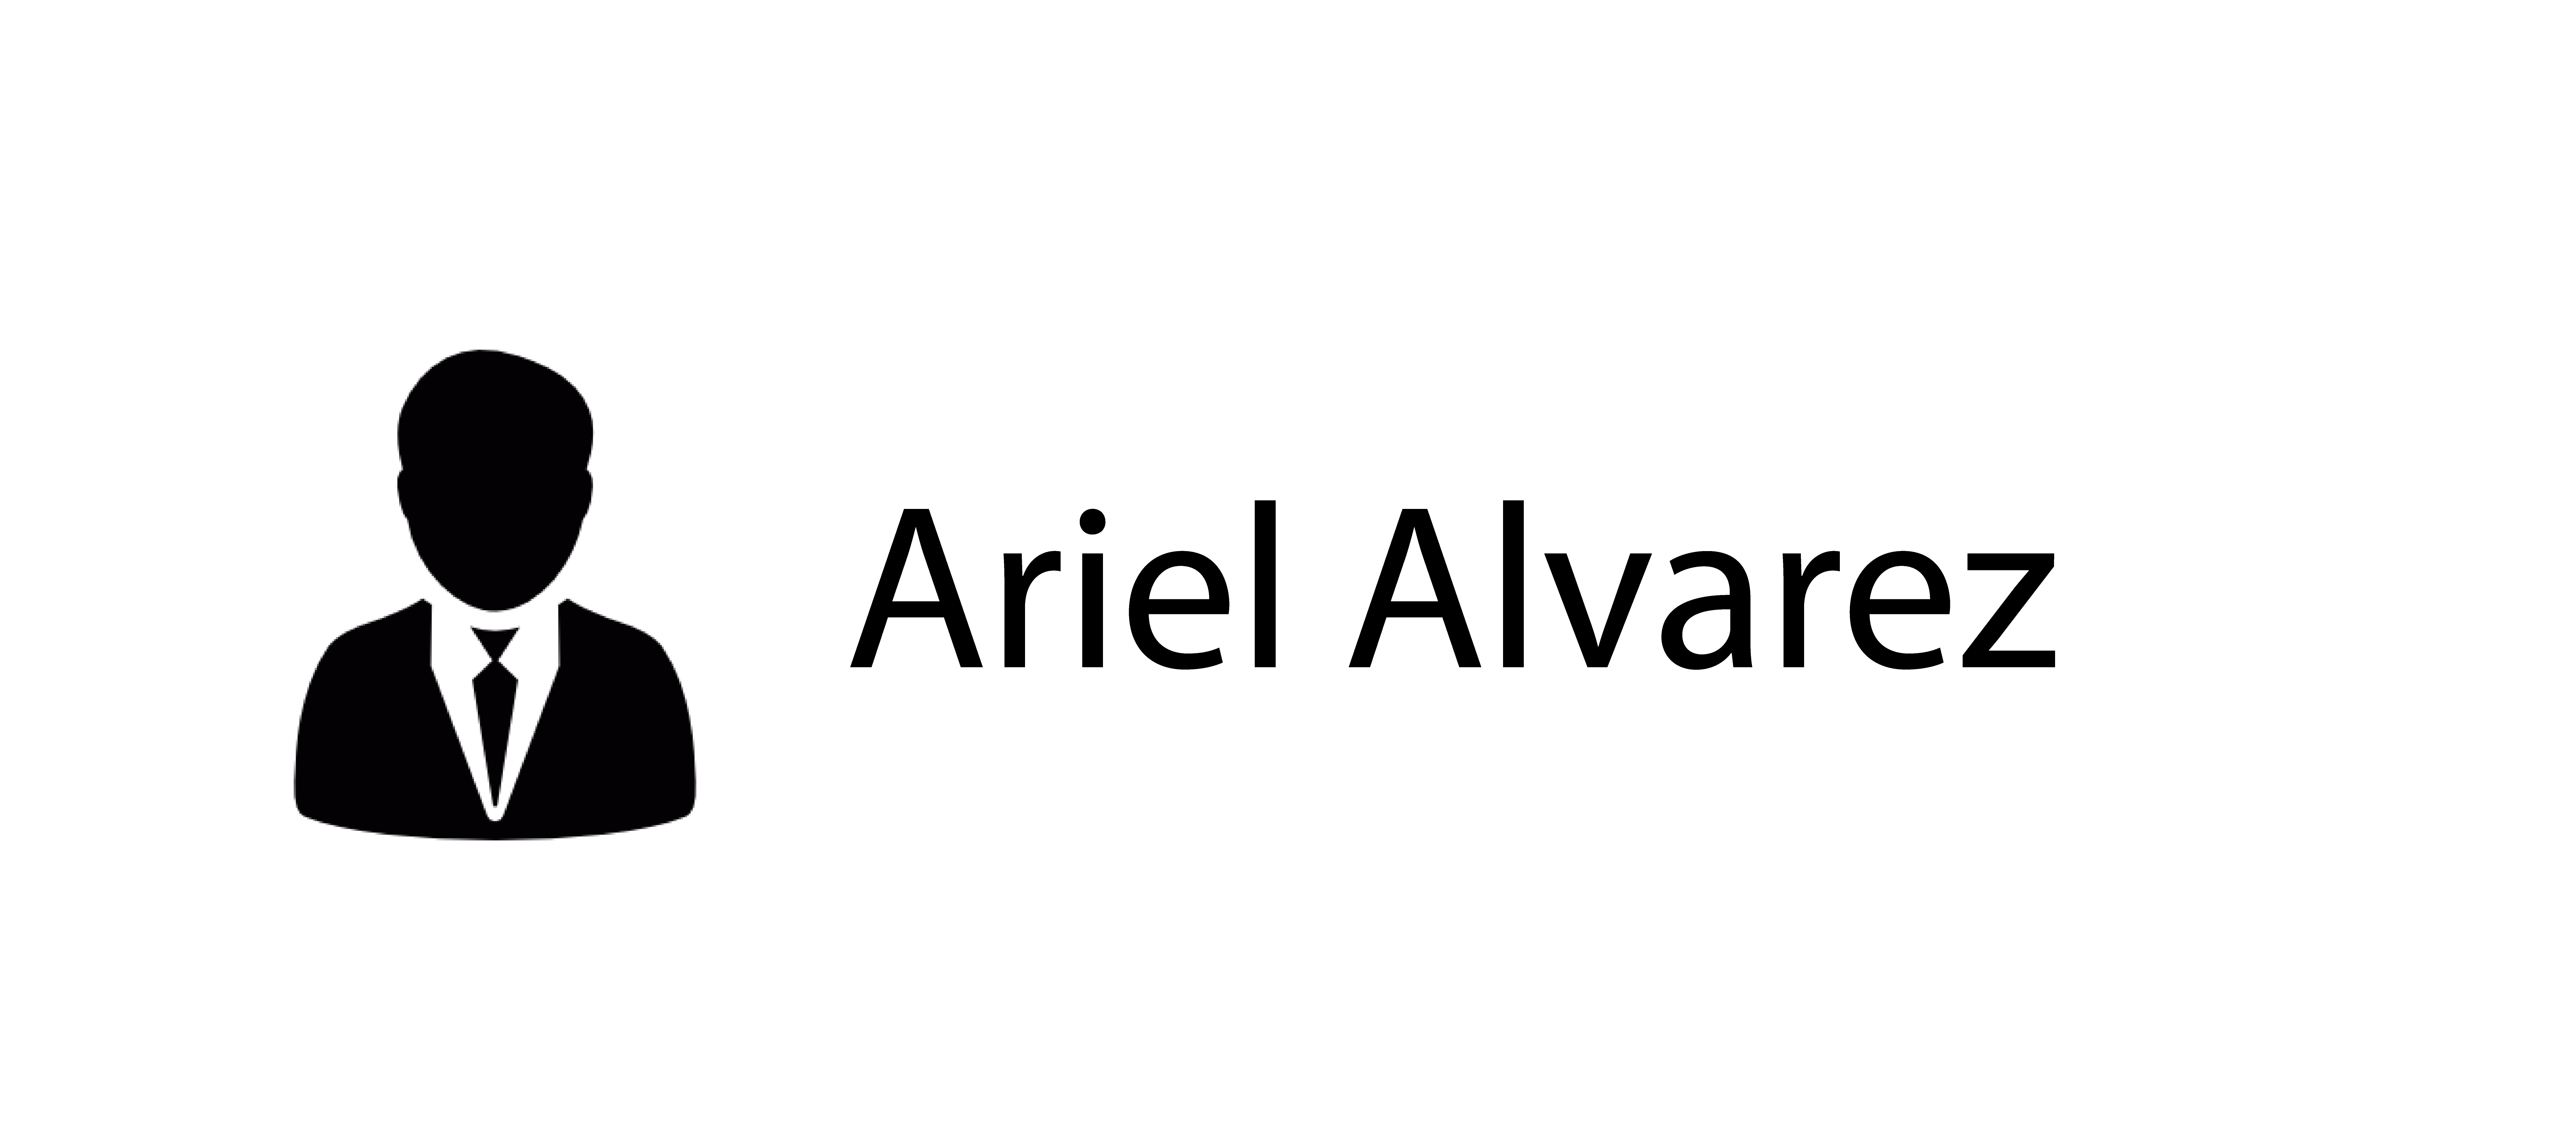 Ariel Alvarez